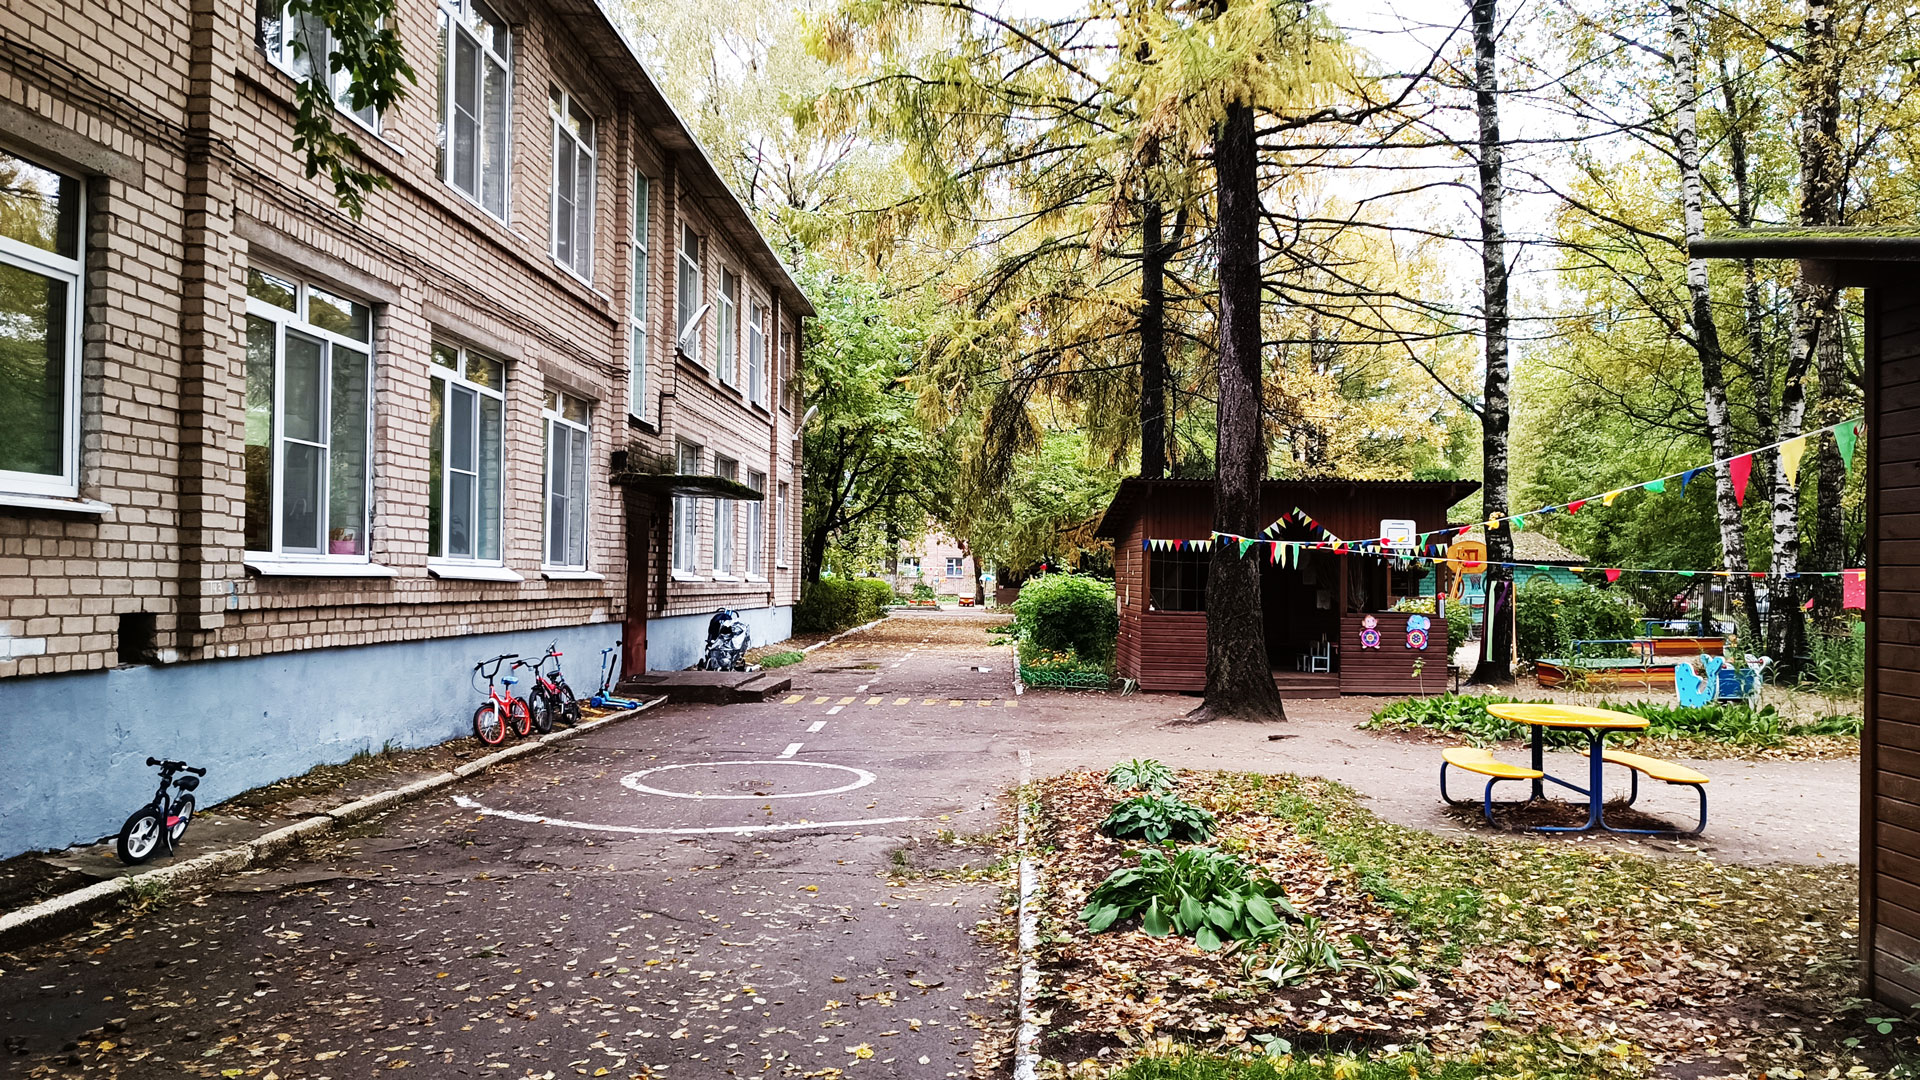 Детский сад 65 Ярославль: общий вид территории.